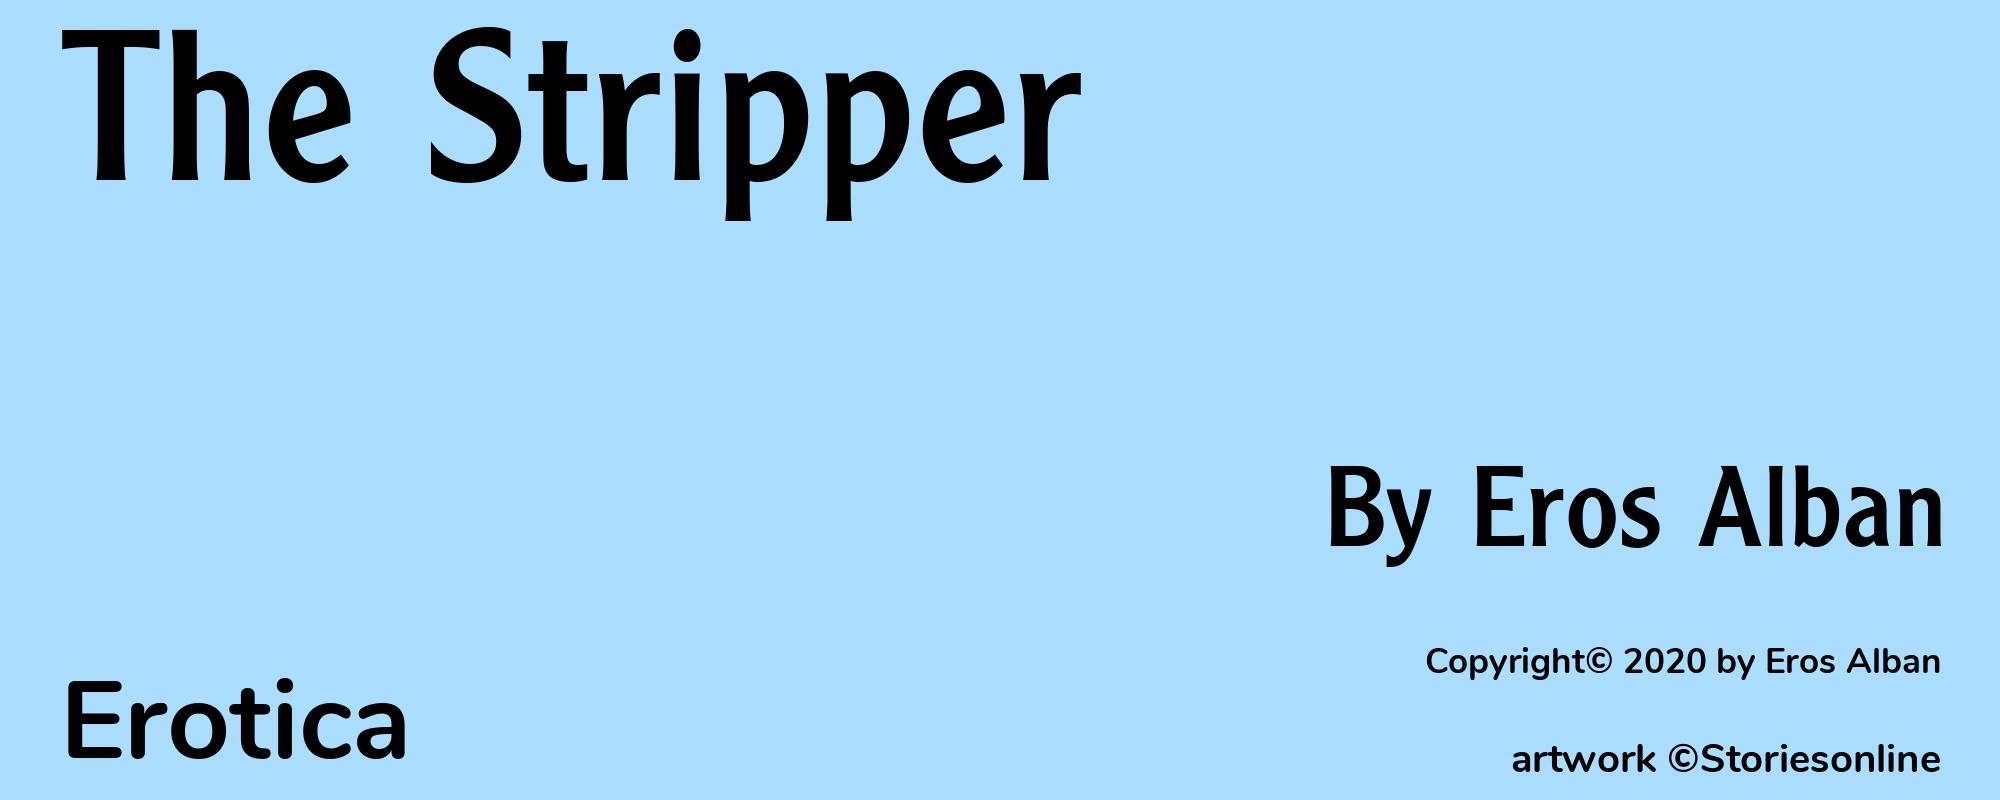 The Stripper - Cover